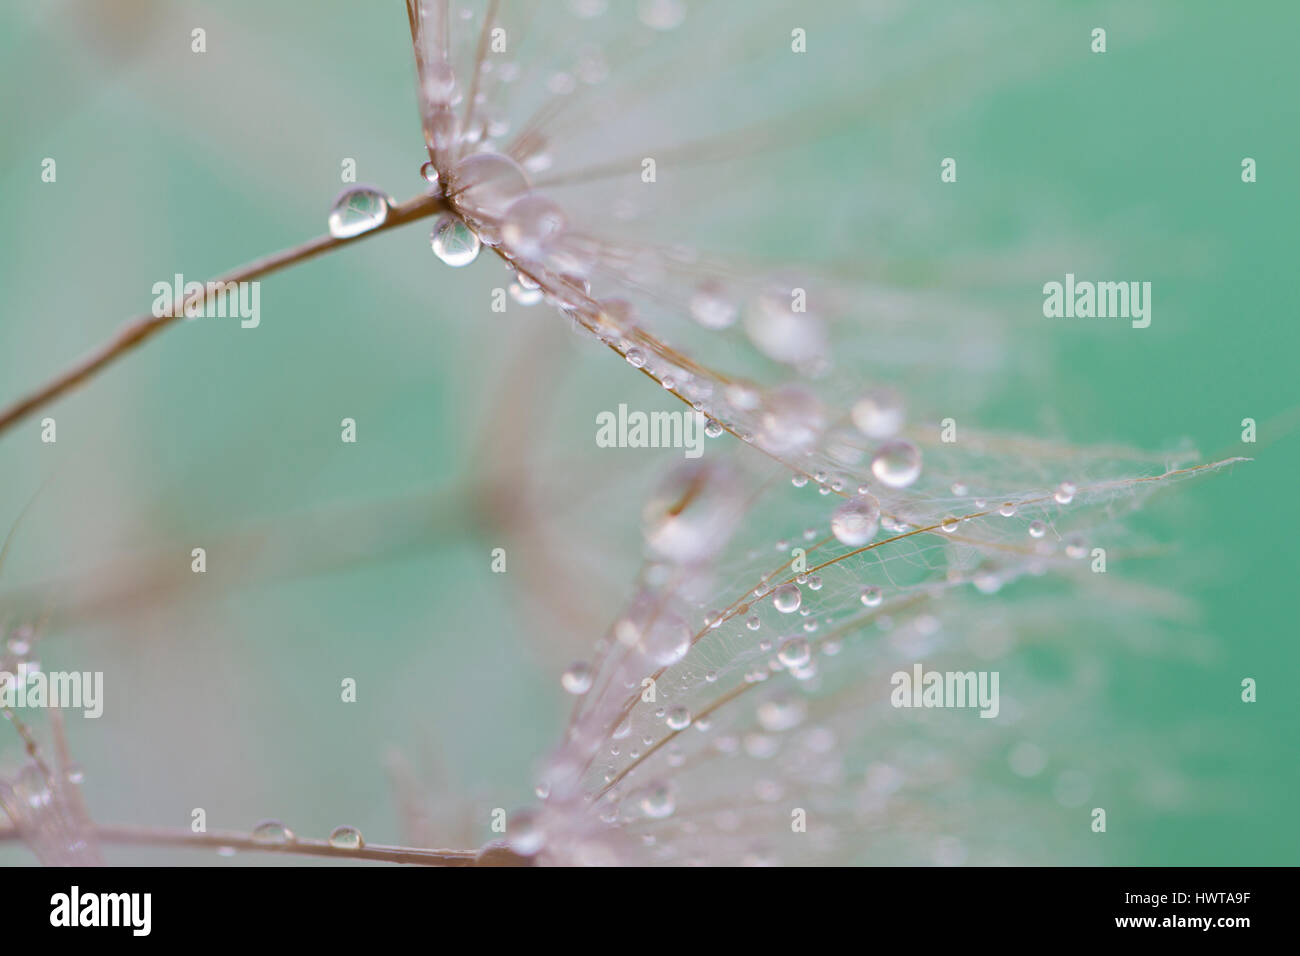 wet seeds background Stock Photo